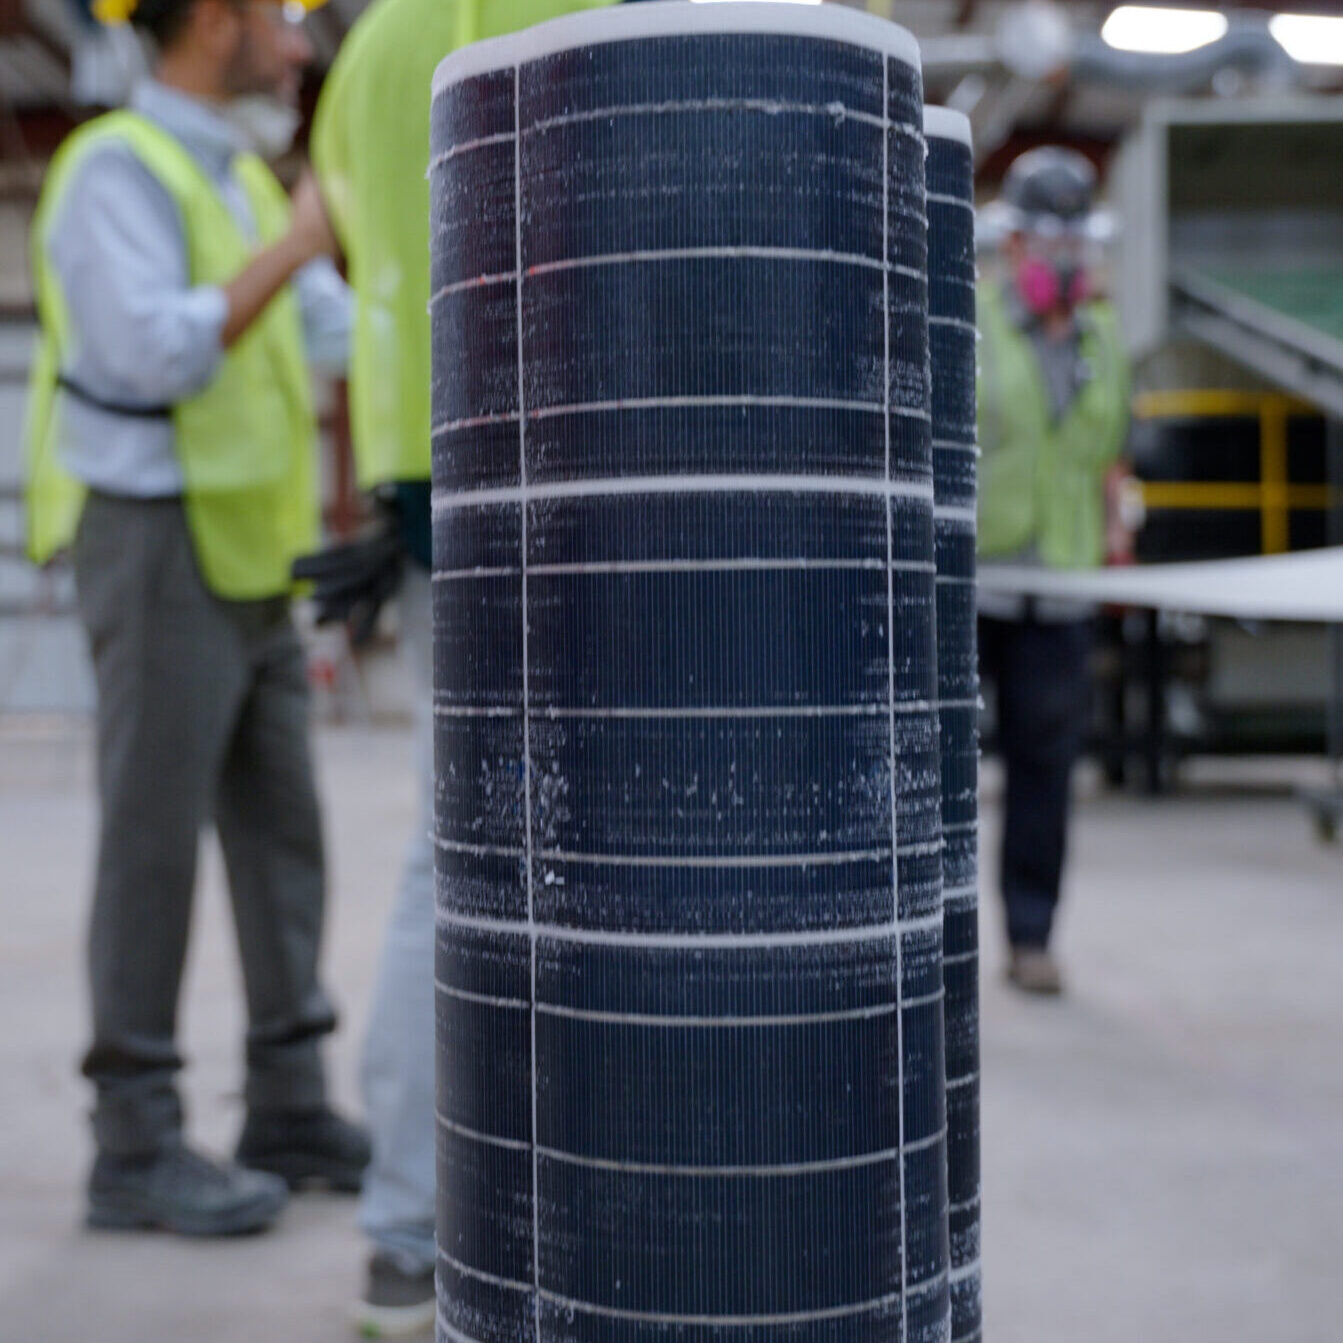 Greenbacker solar panel recycling SOLARCYCLE